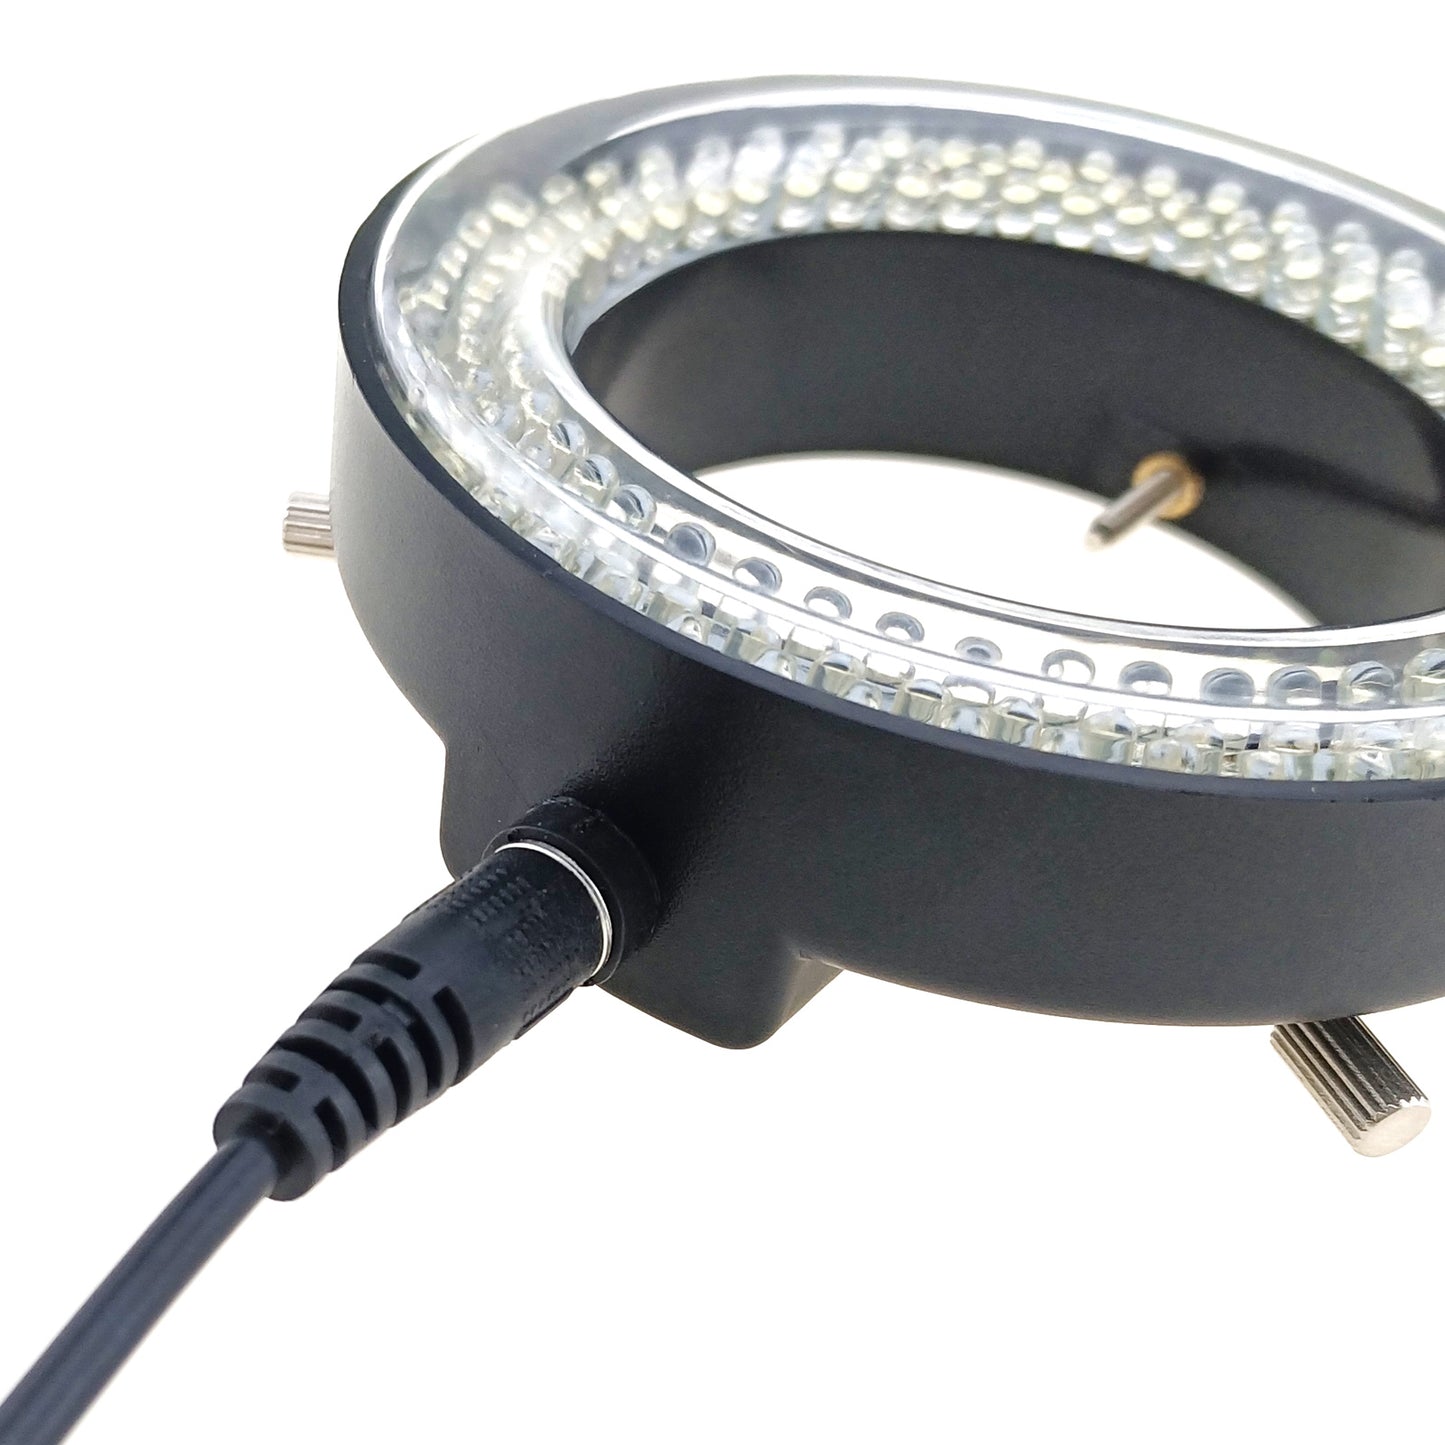 144 LED Ring Light, Separated Dimmer